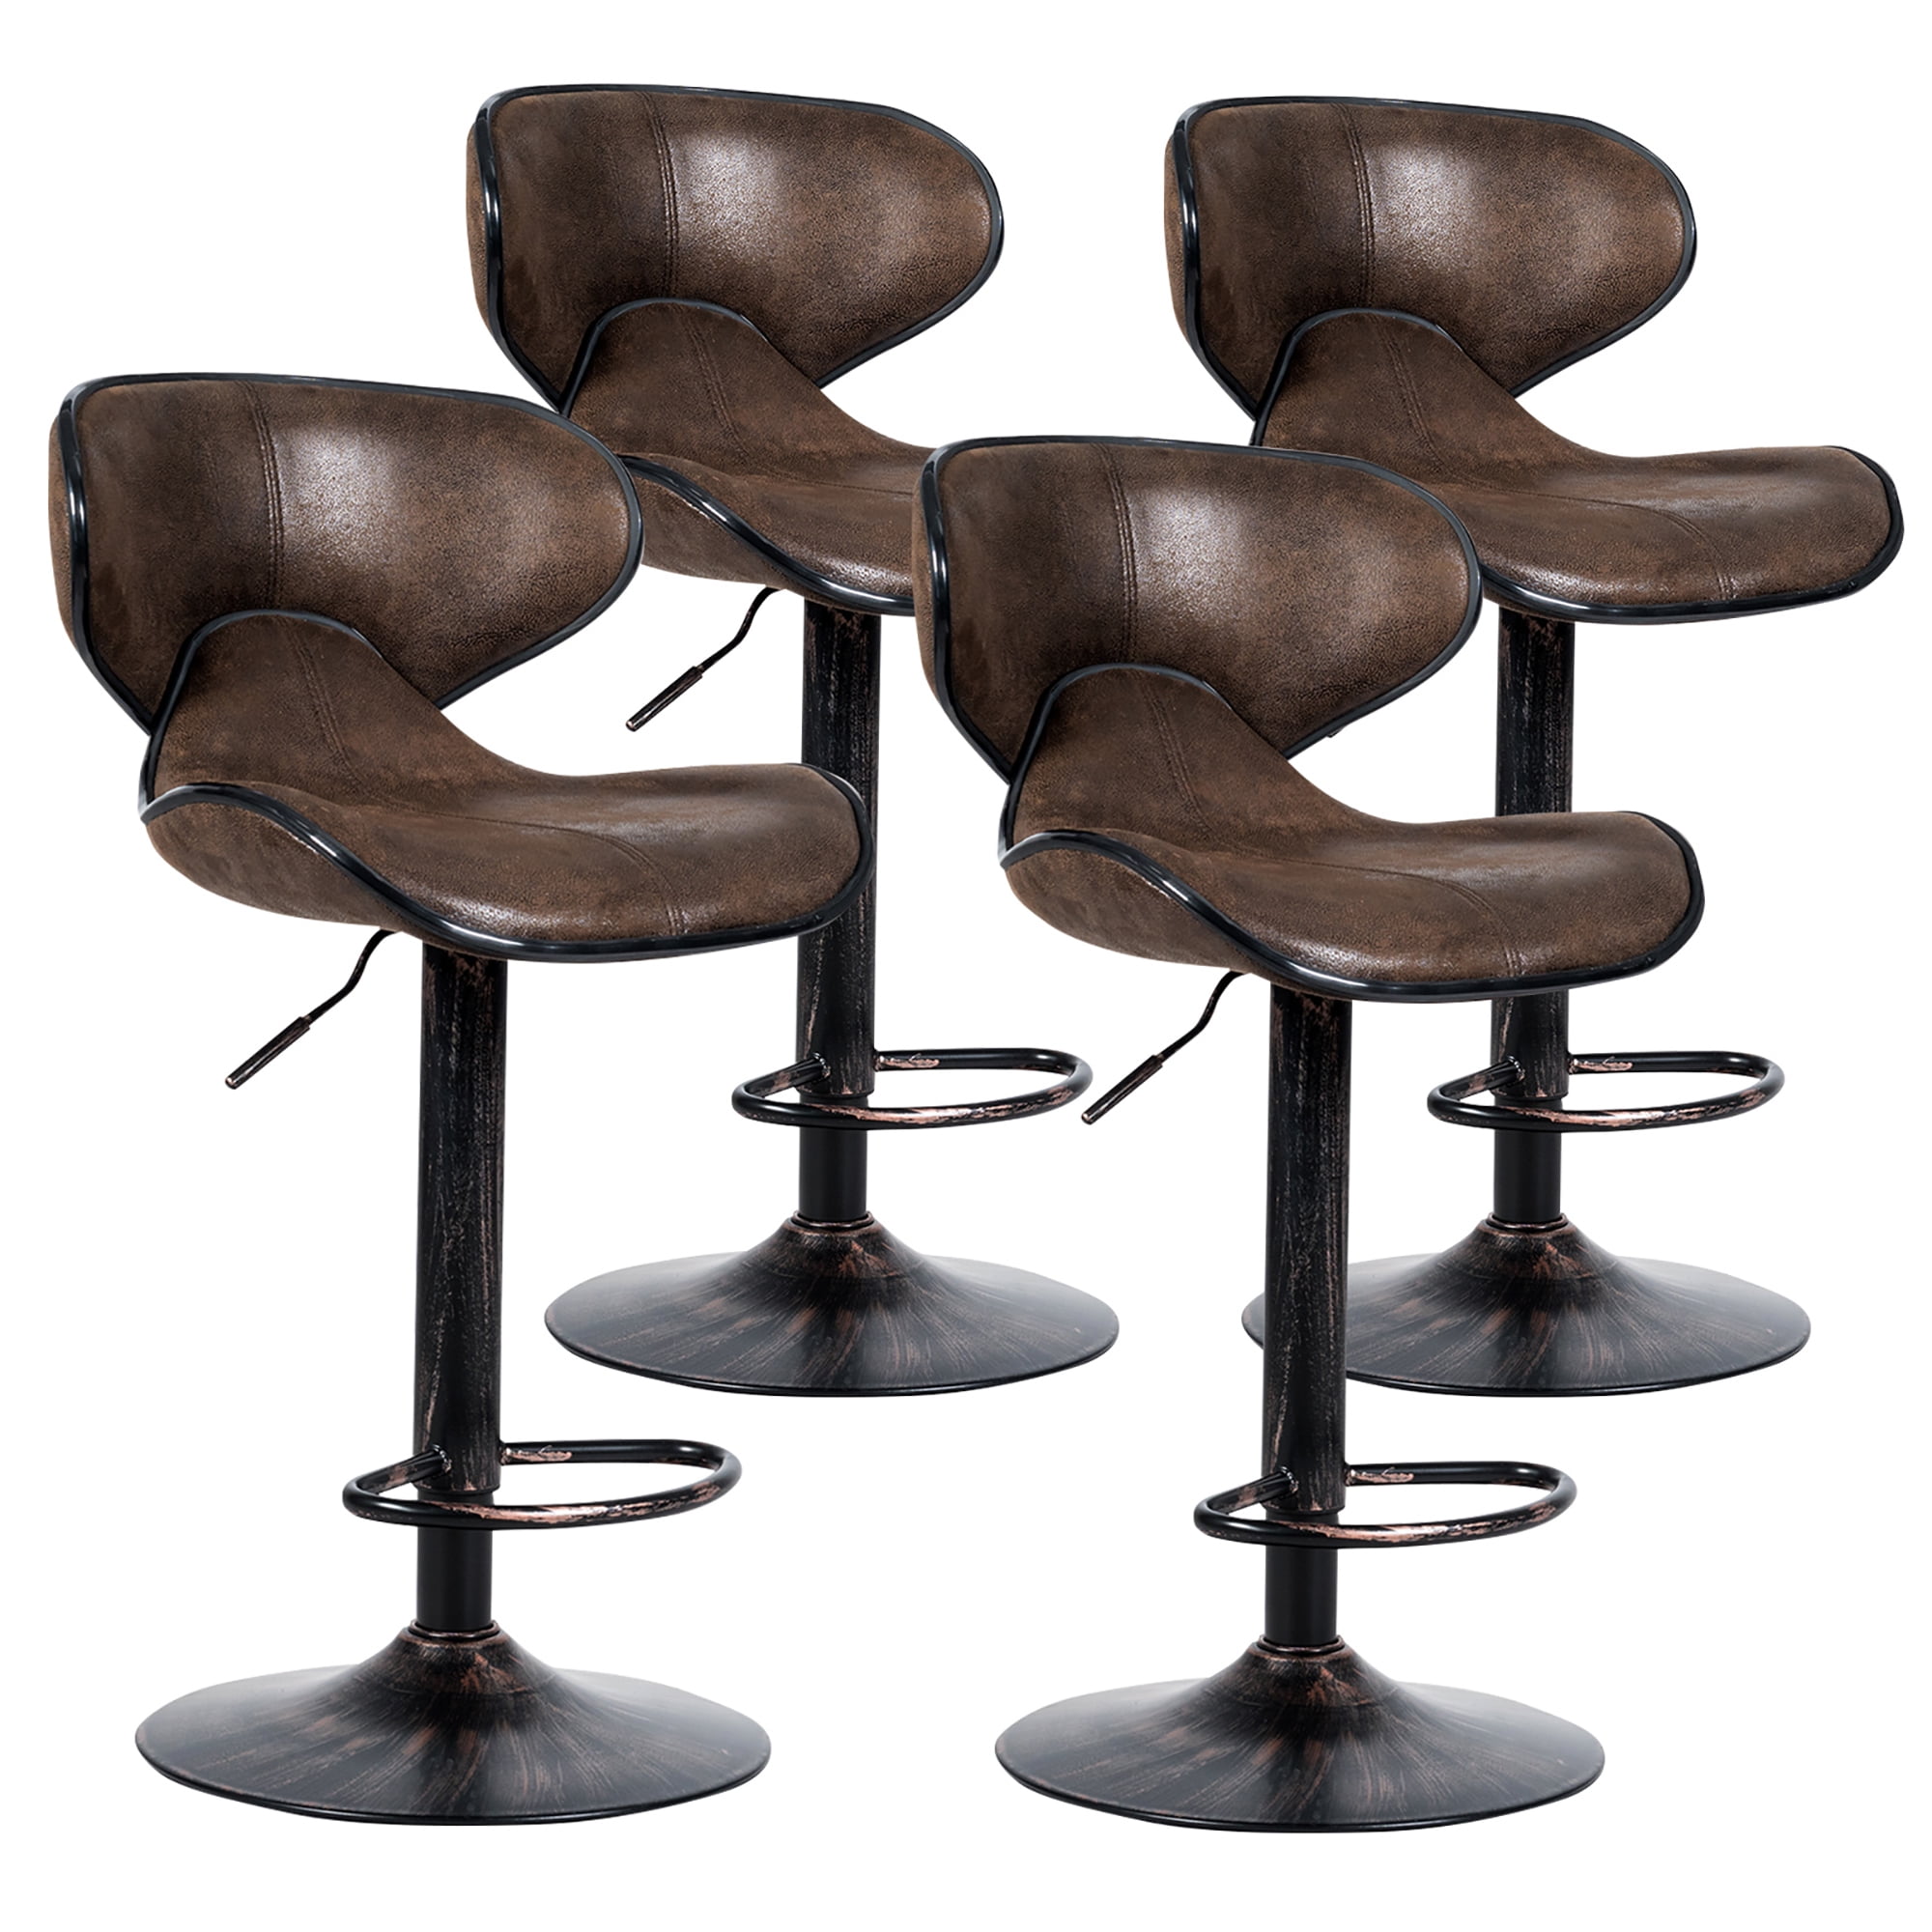 Costway Set of 4 Adjustable Bar Stools Swivel Bar Chairs w/Backrest